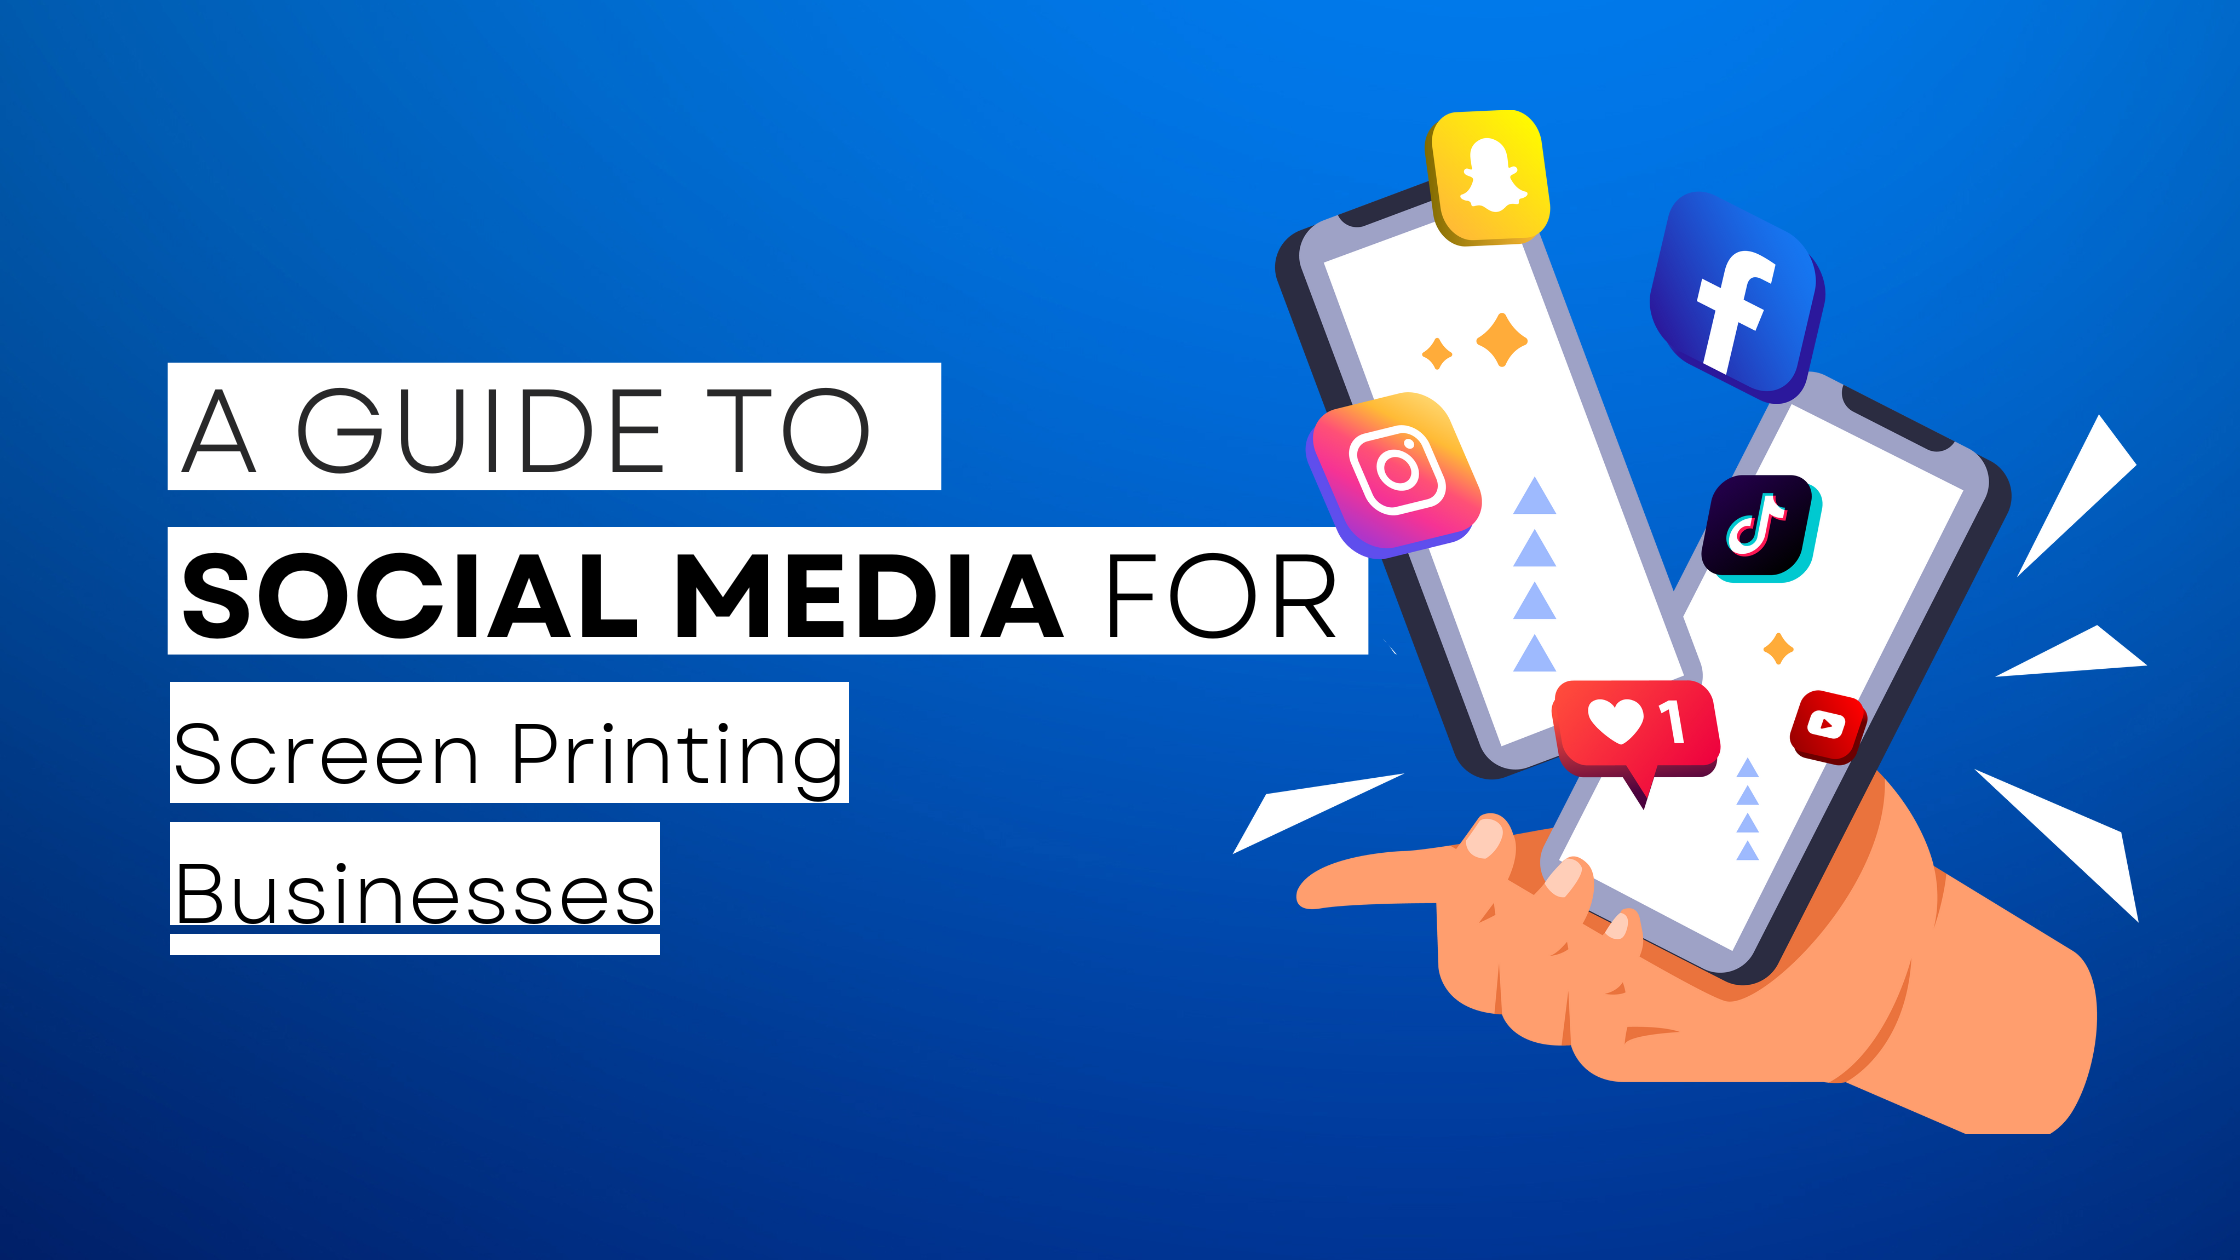 How to start Screen Printing on social media